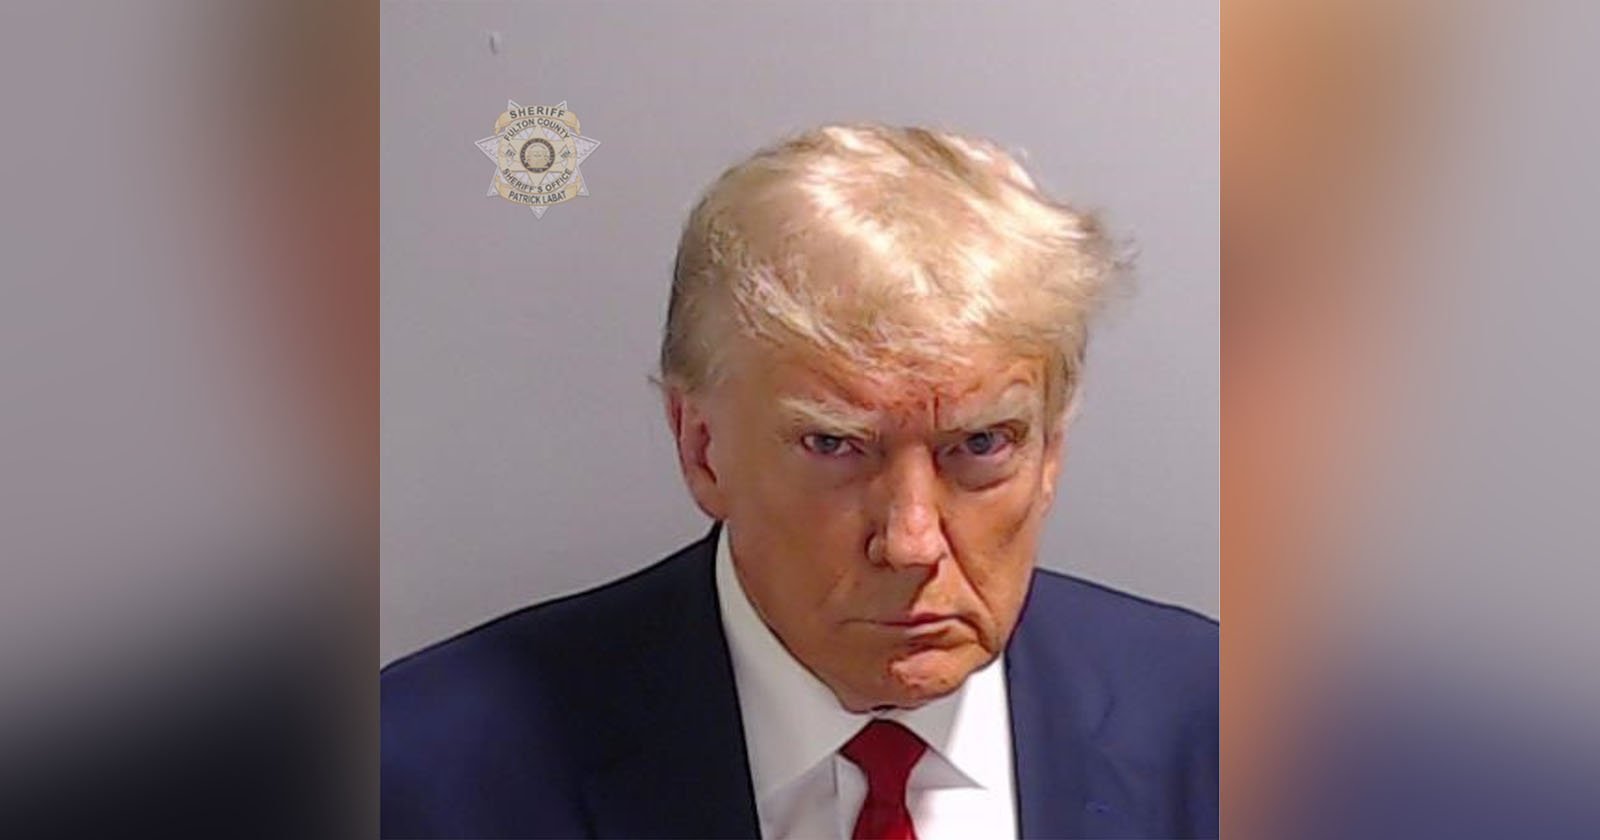 This is Former President Donald Trump's Mug Shot | PetaPixel